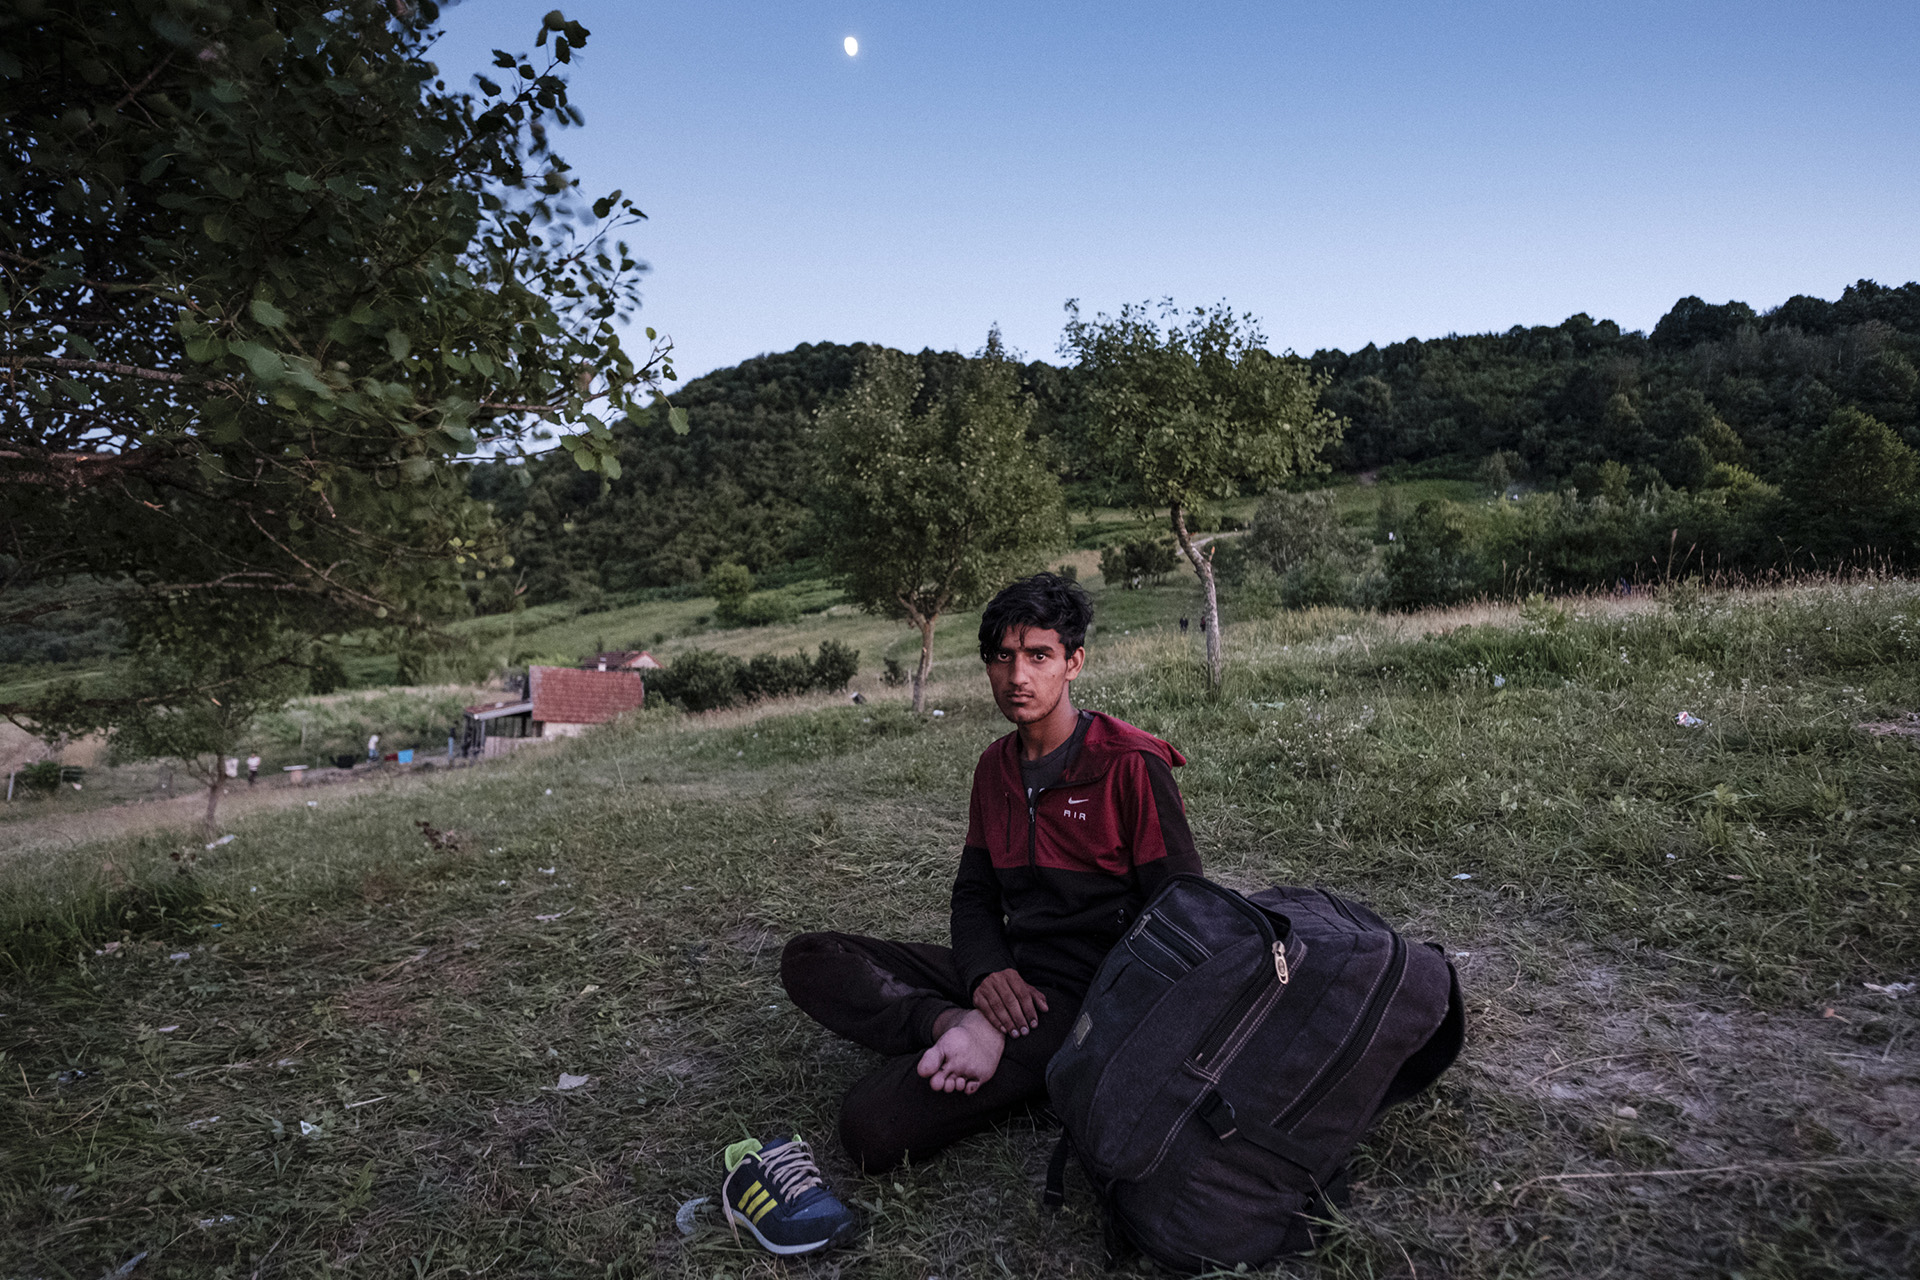 An Afghan refugee is seen resting near Bihać, northwestern Bosnia after being pushed back by Croatian police. ©Ziyah Gafic/VII